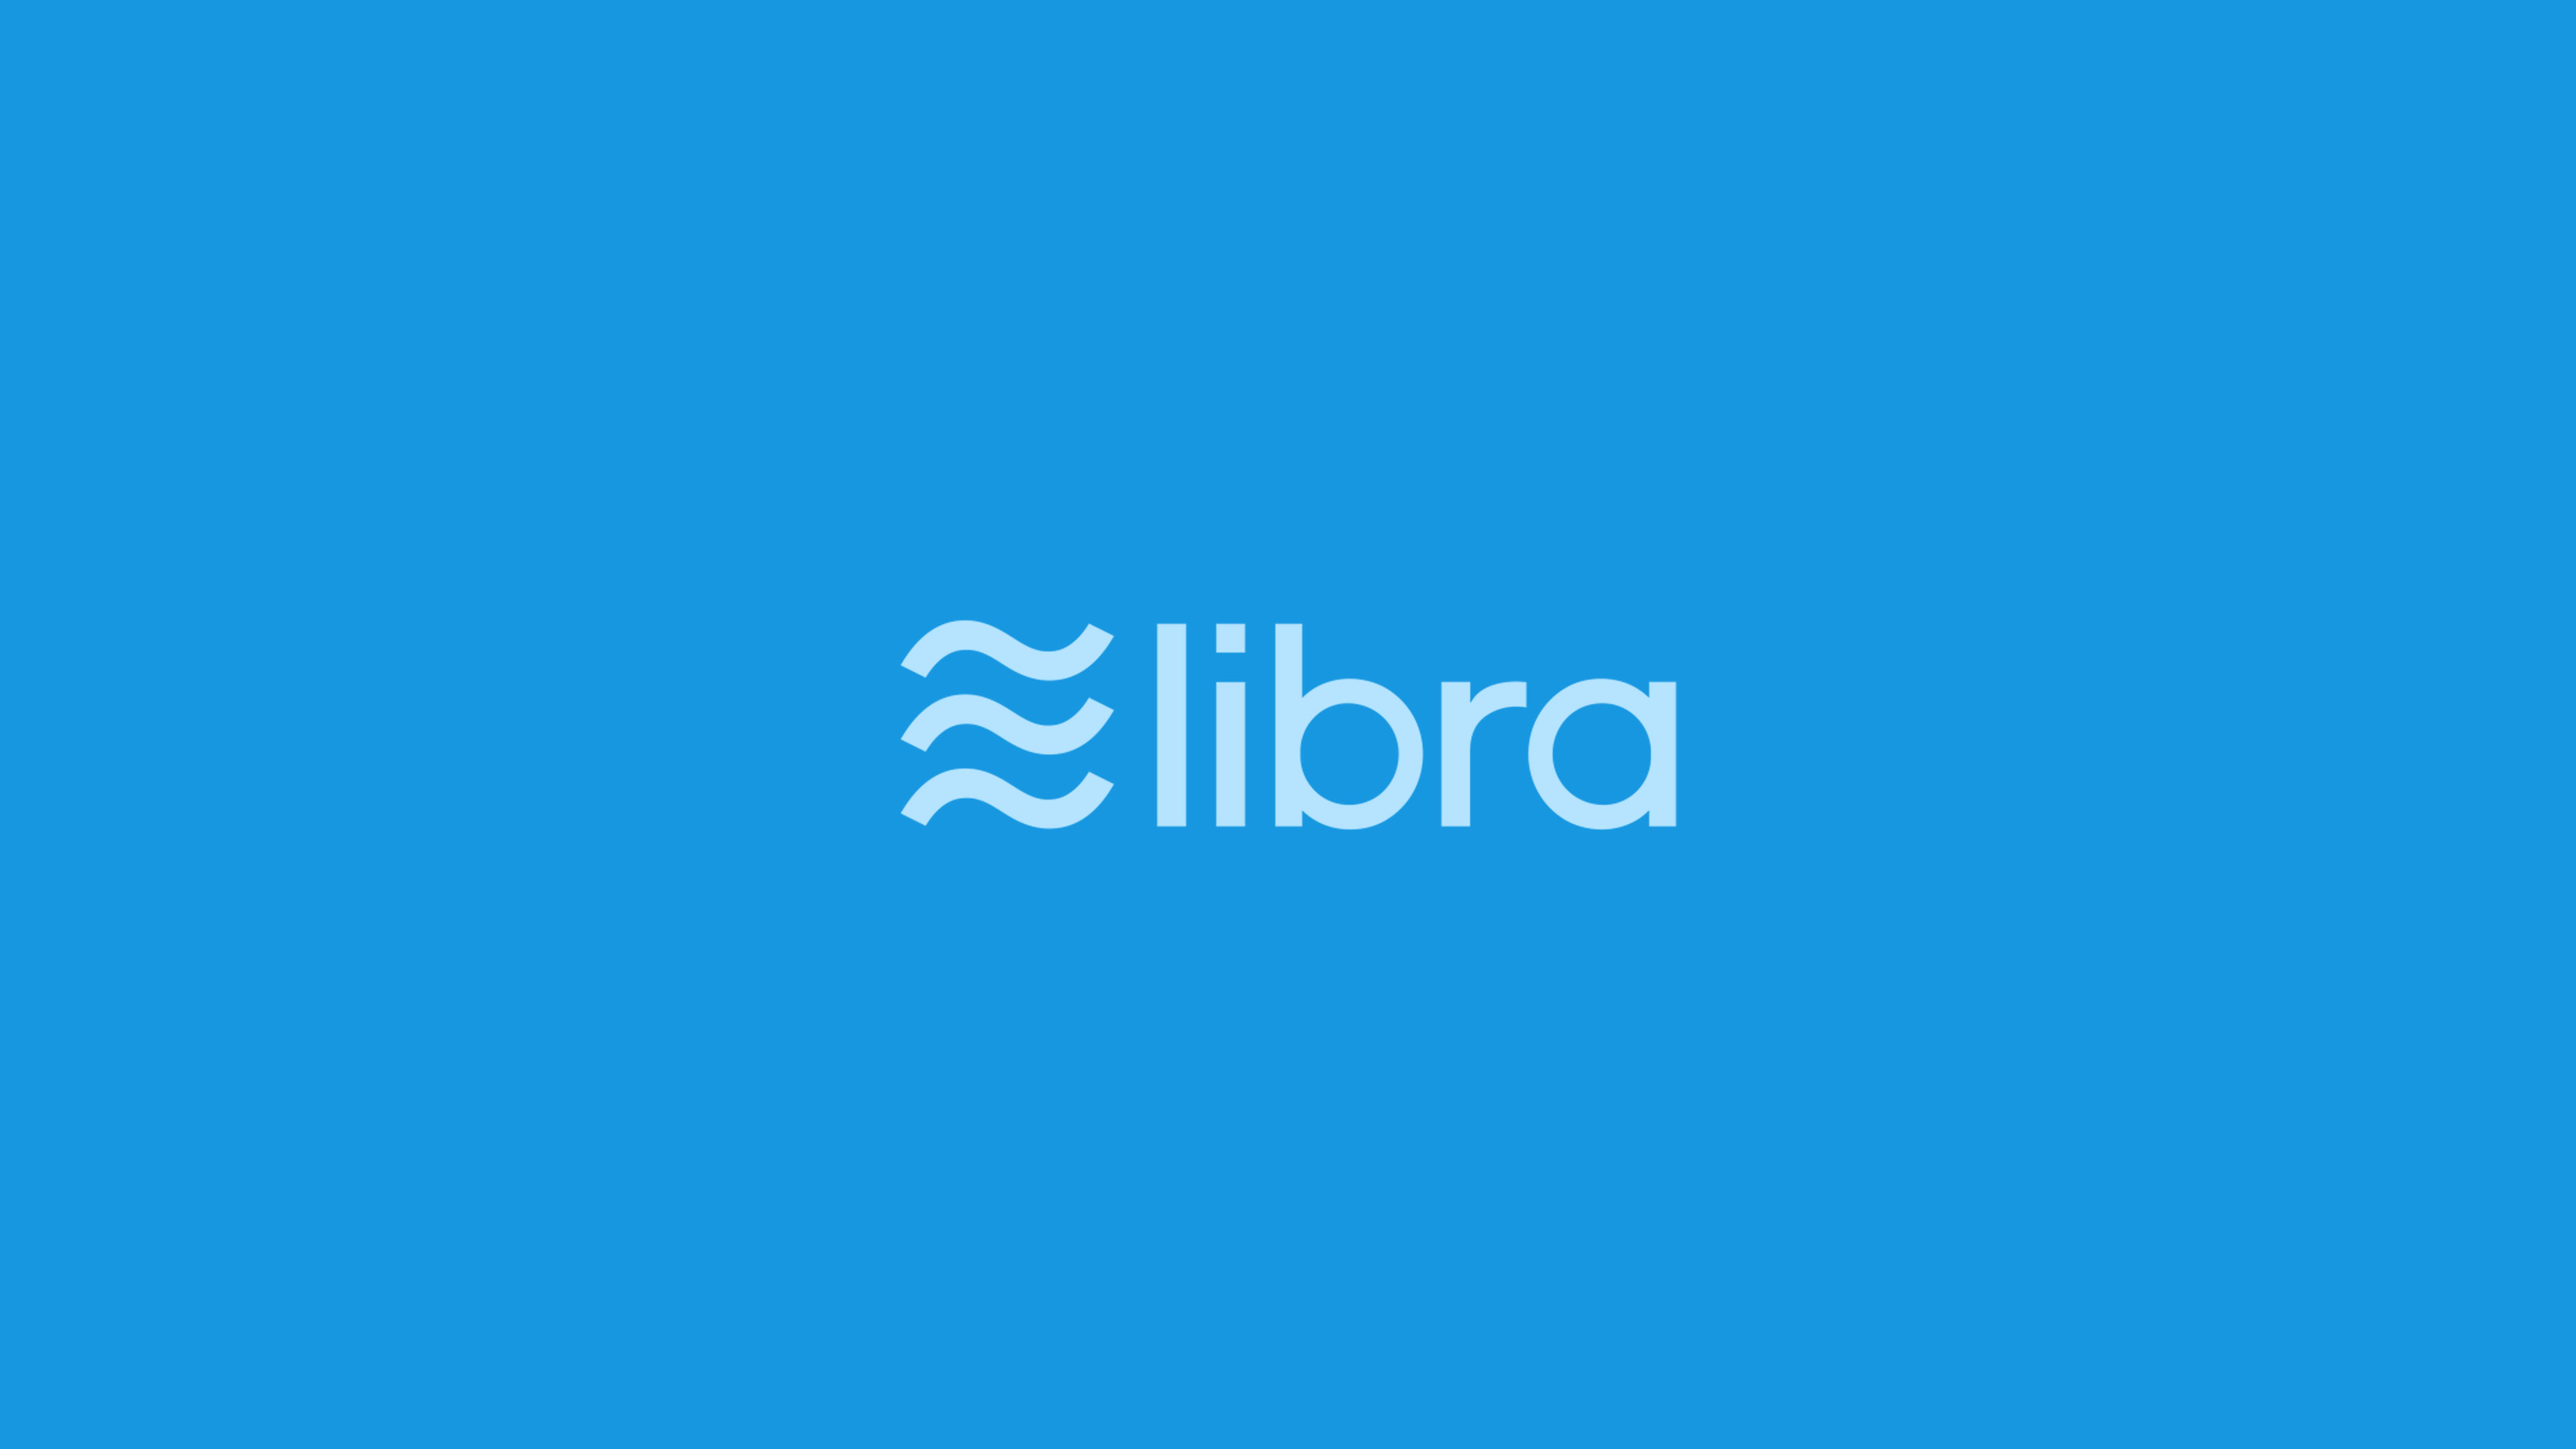 Libra logo on blue